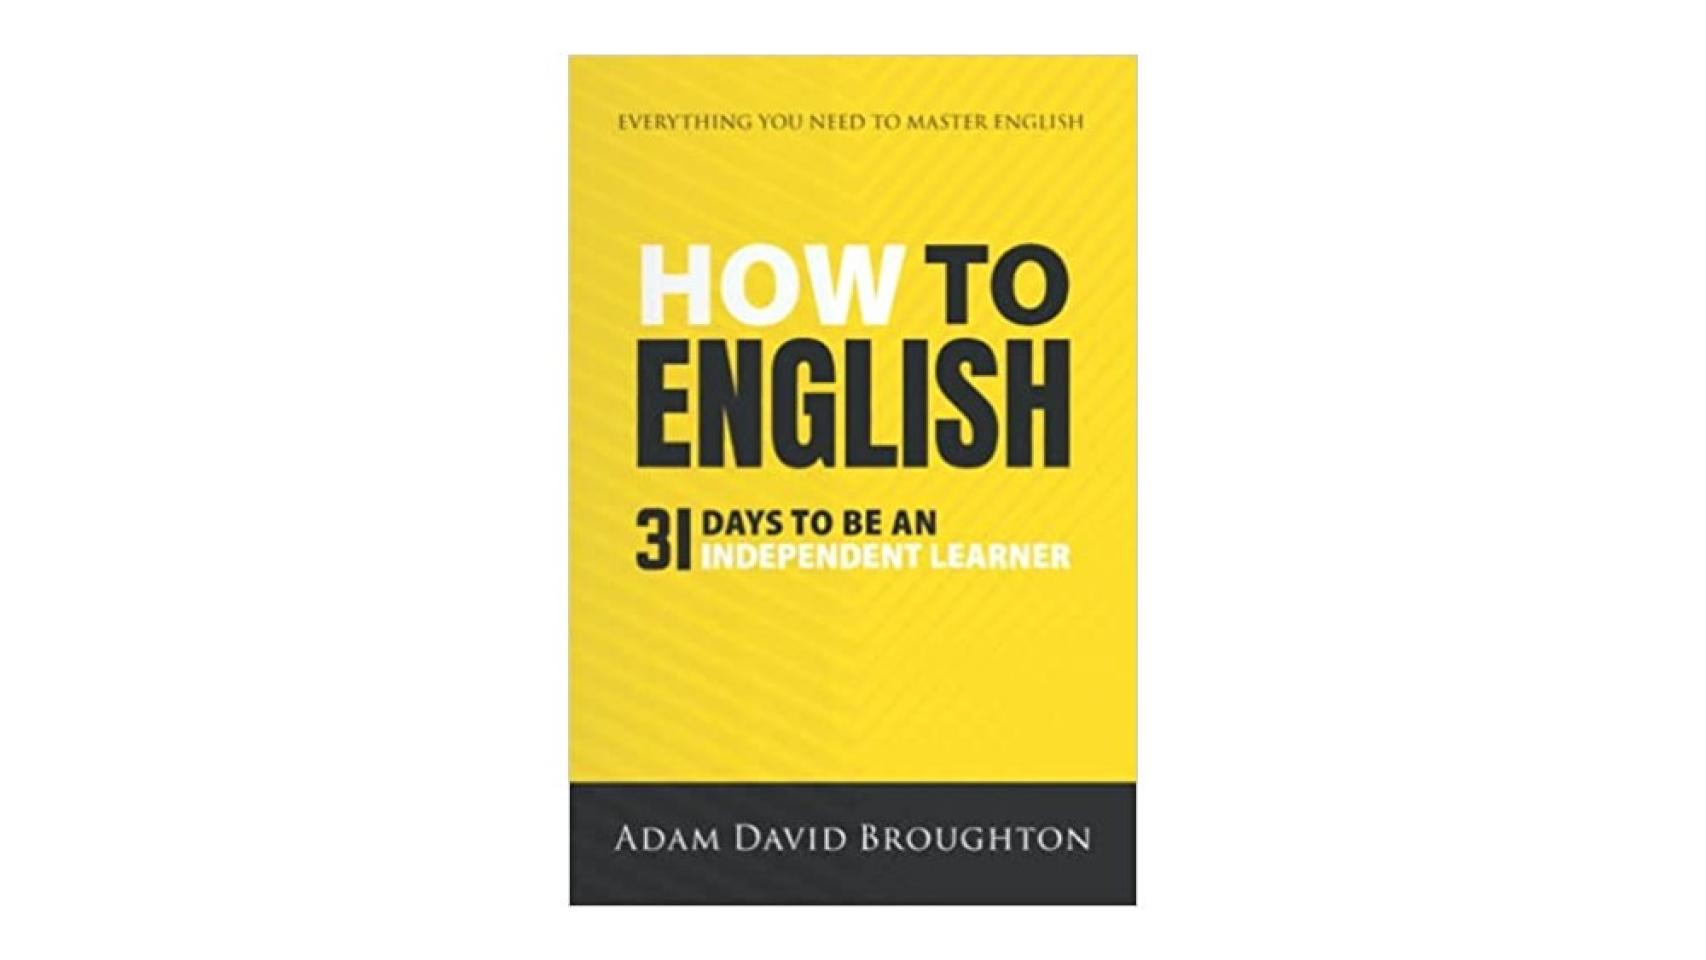 Top 5 libros para aprender inglés de manera divertida